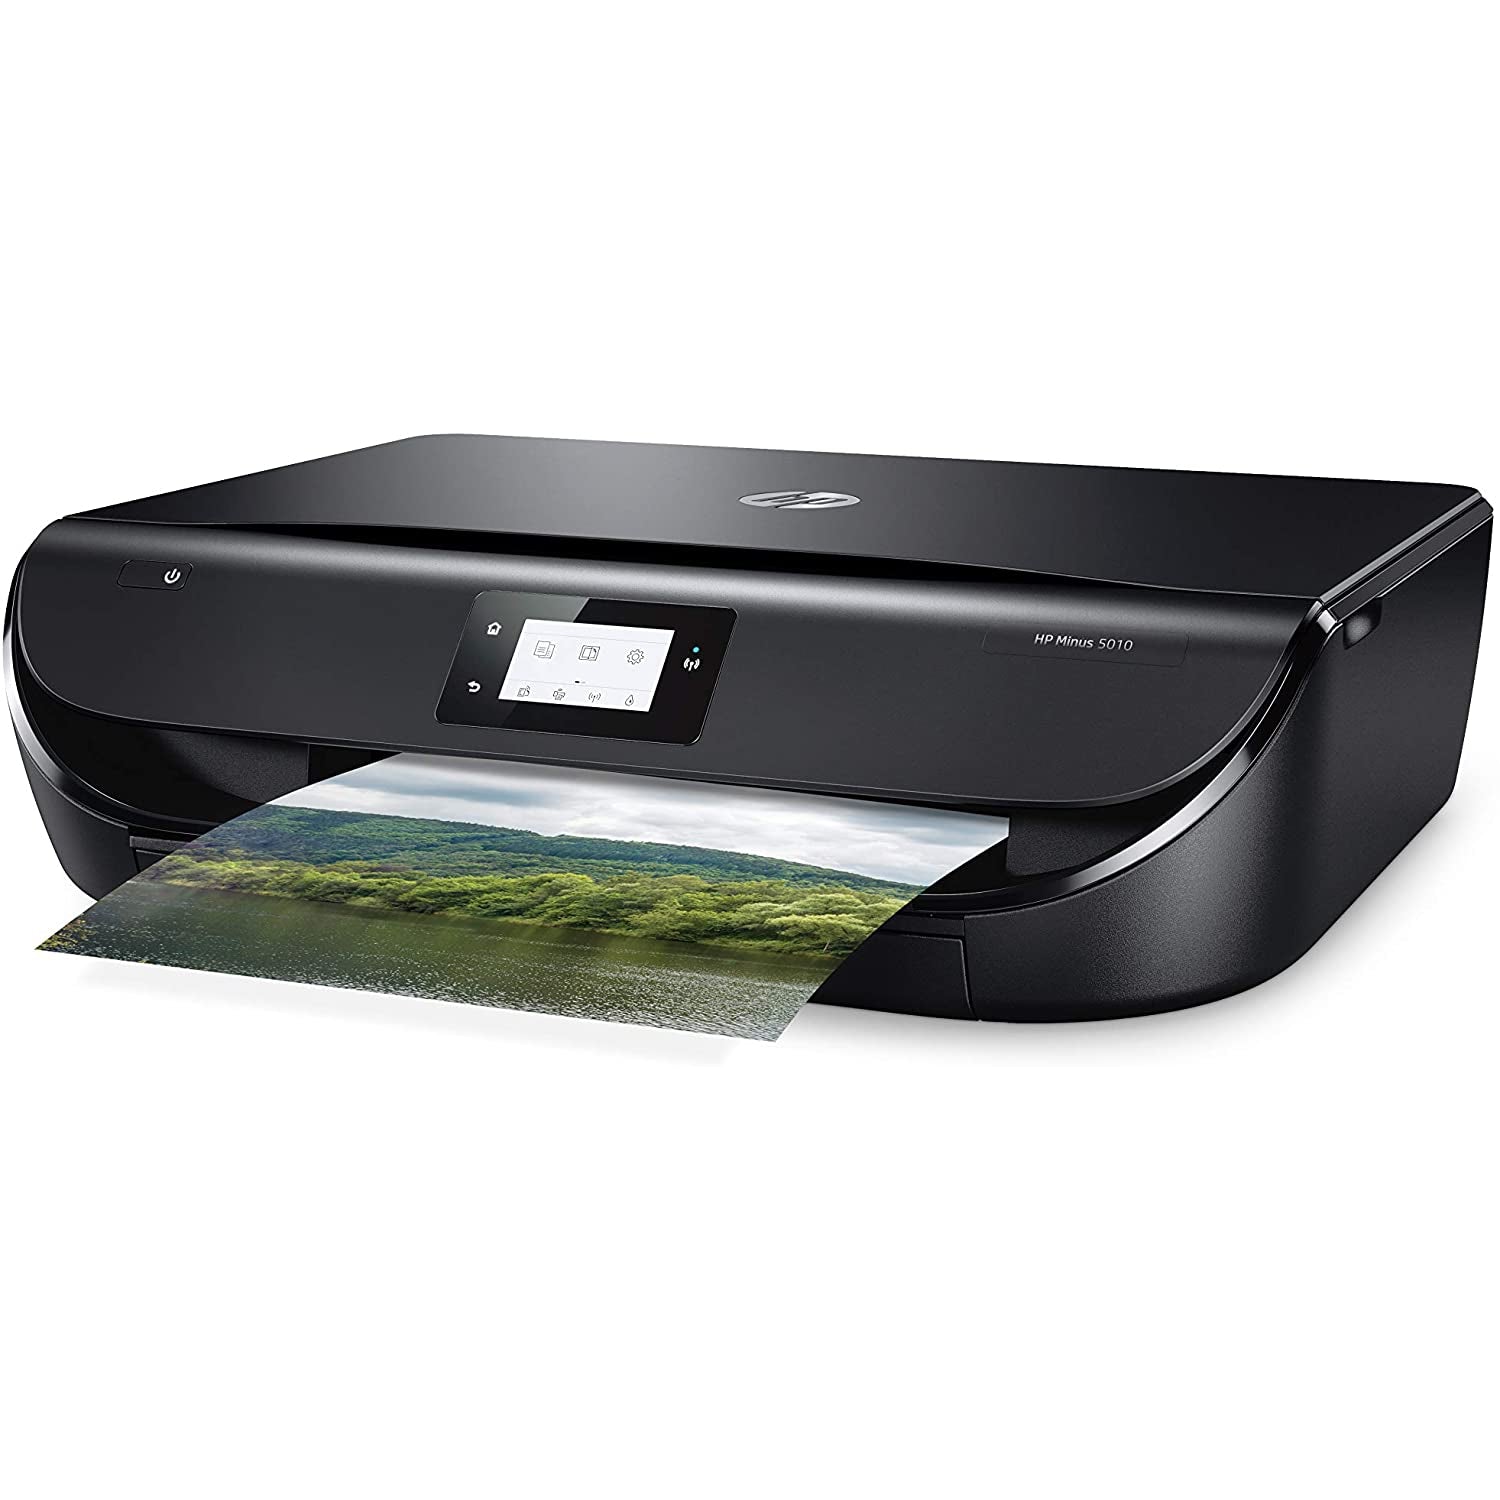 HP Envy 5010 All-in-One Printer - Black